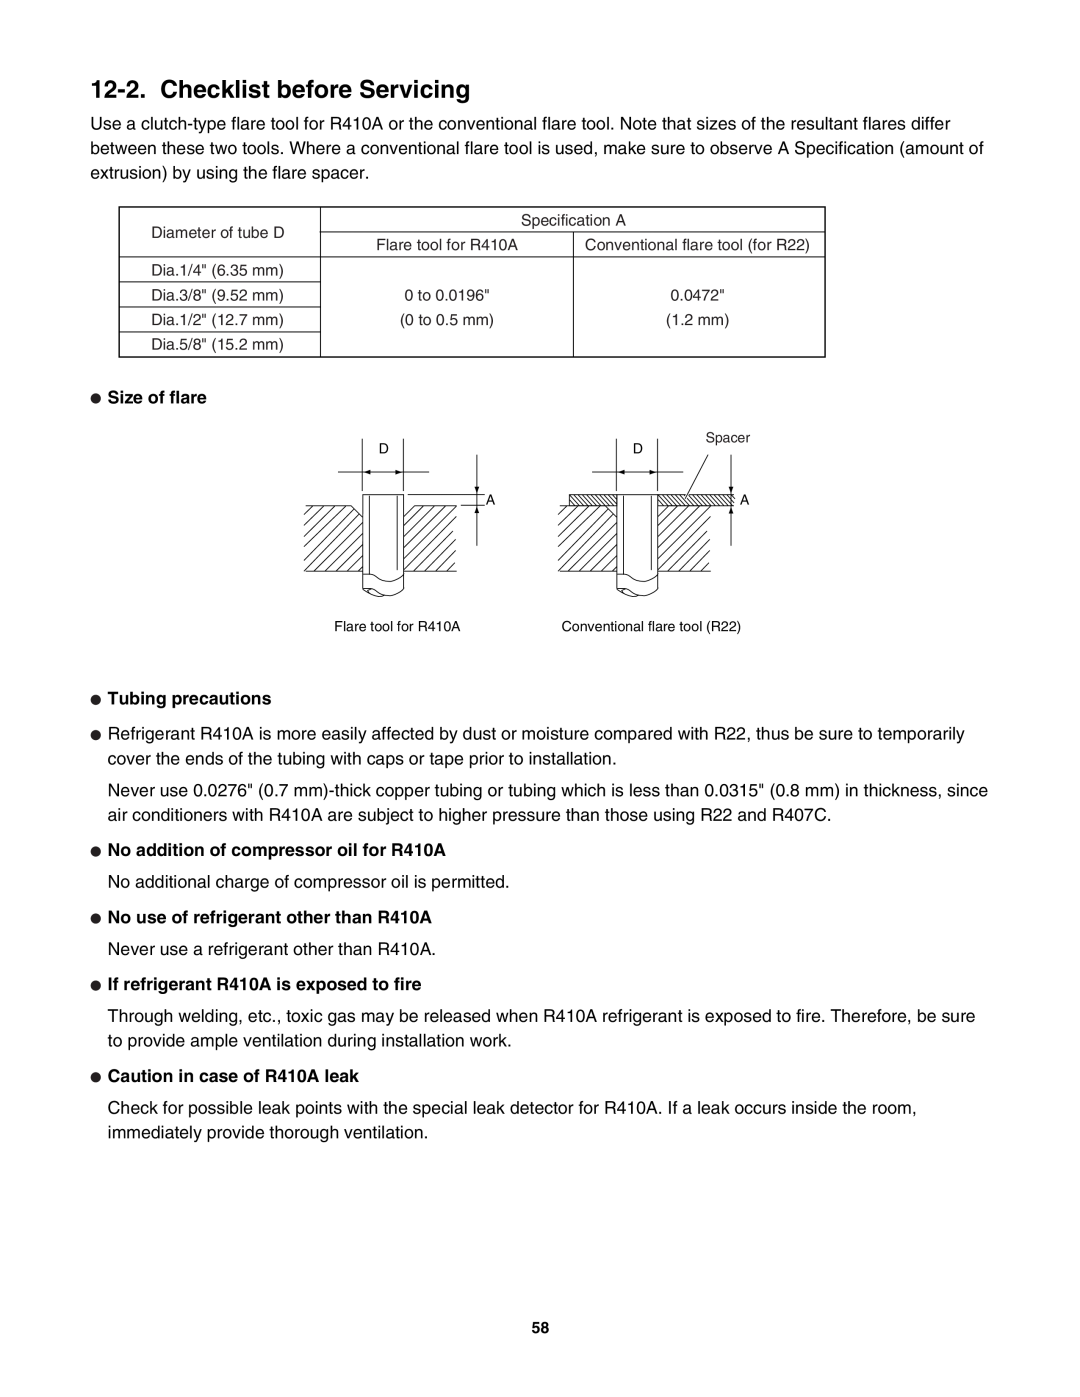 Sanyo CL2472, C2472 Checklist before Servicing, Size of flare, Tubing precautions, No addition of compressor oil for R410A 